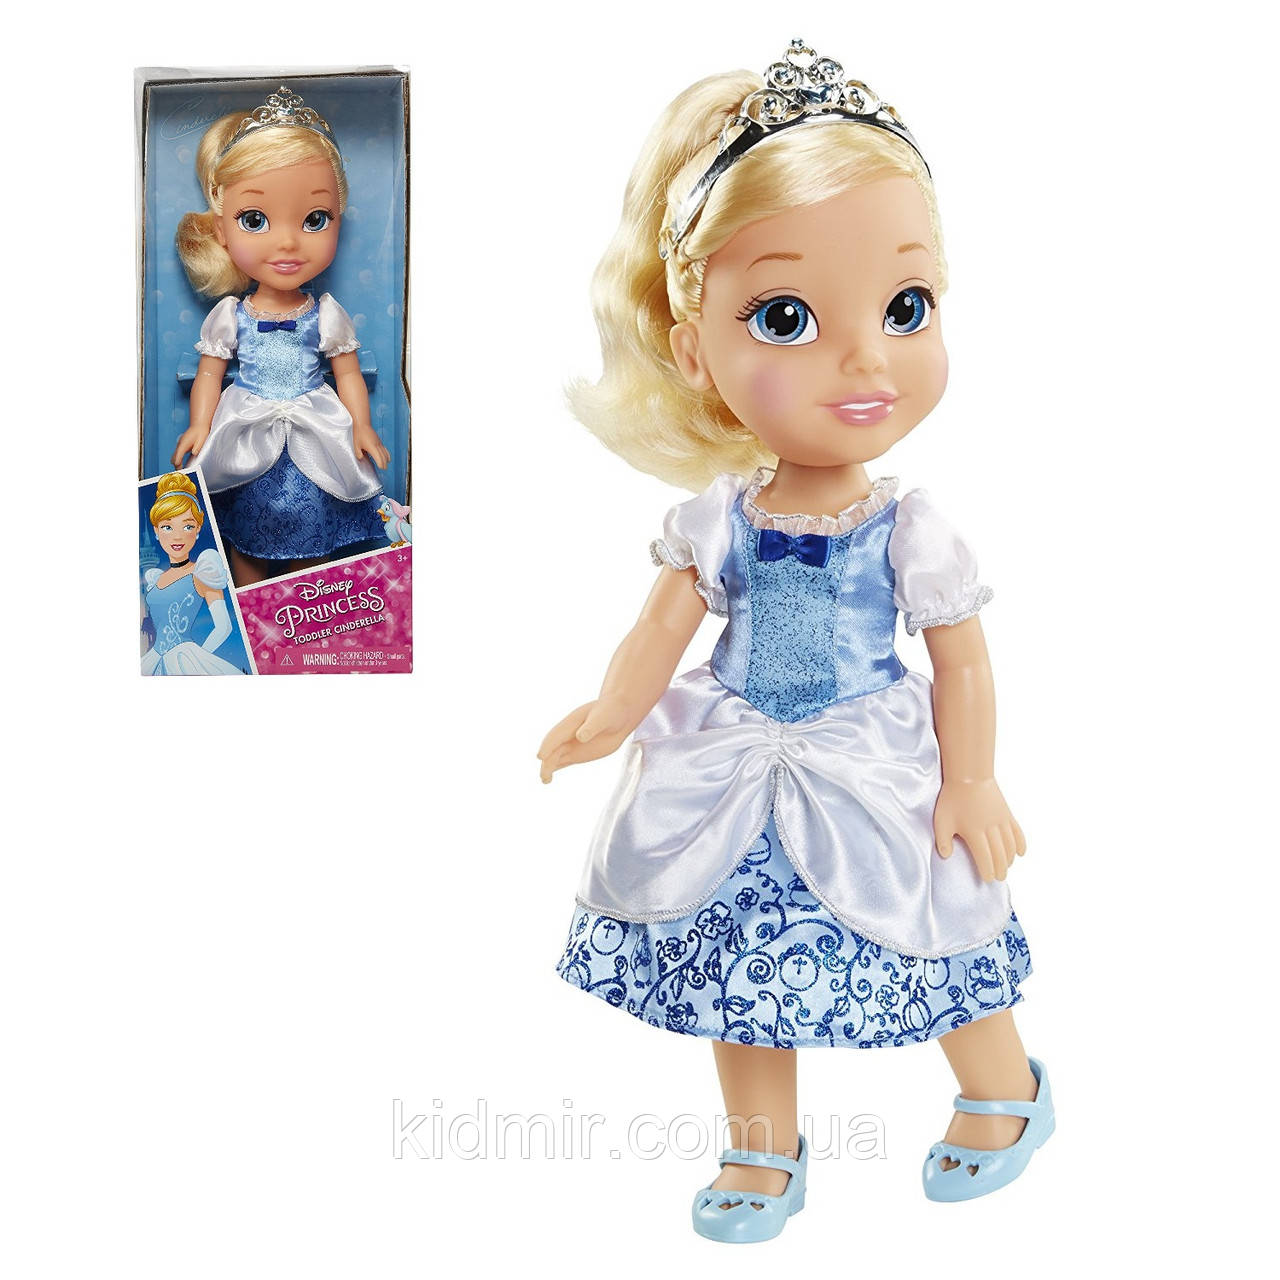 Disney Teddler Cinderella 99542 Лялька малятко Попелюшка Принцеса Дісней